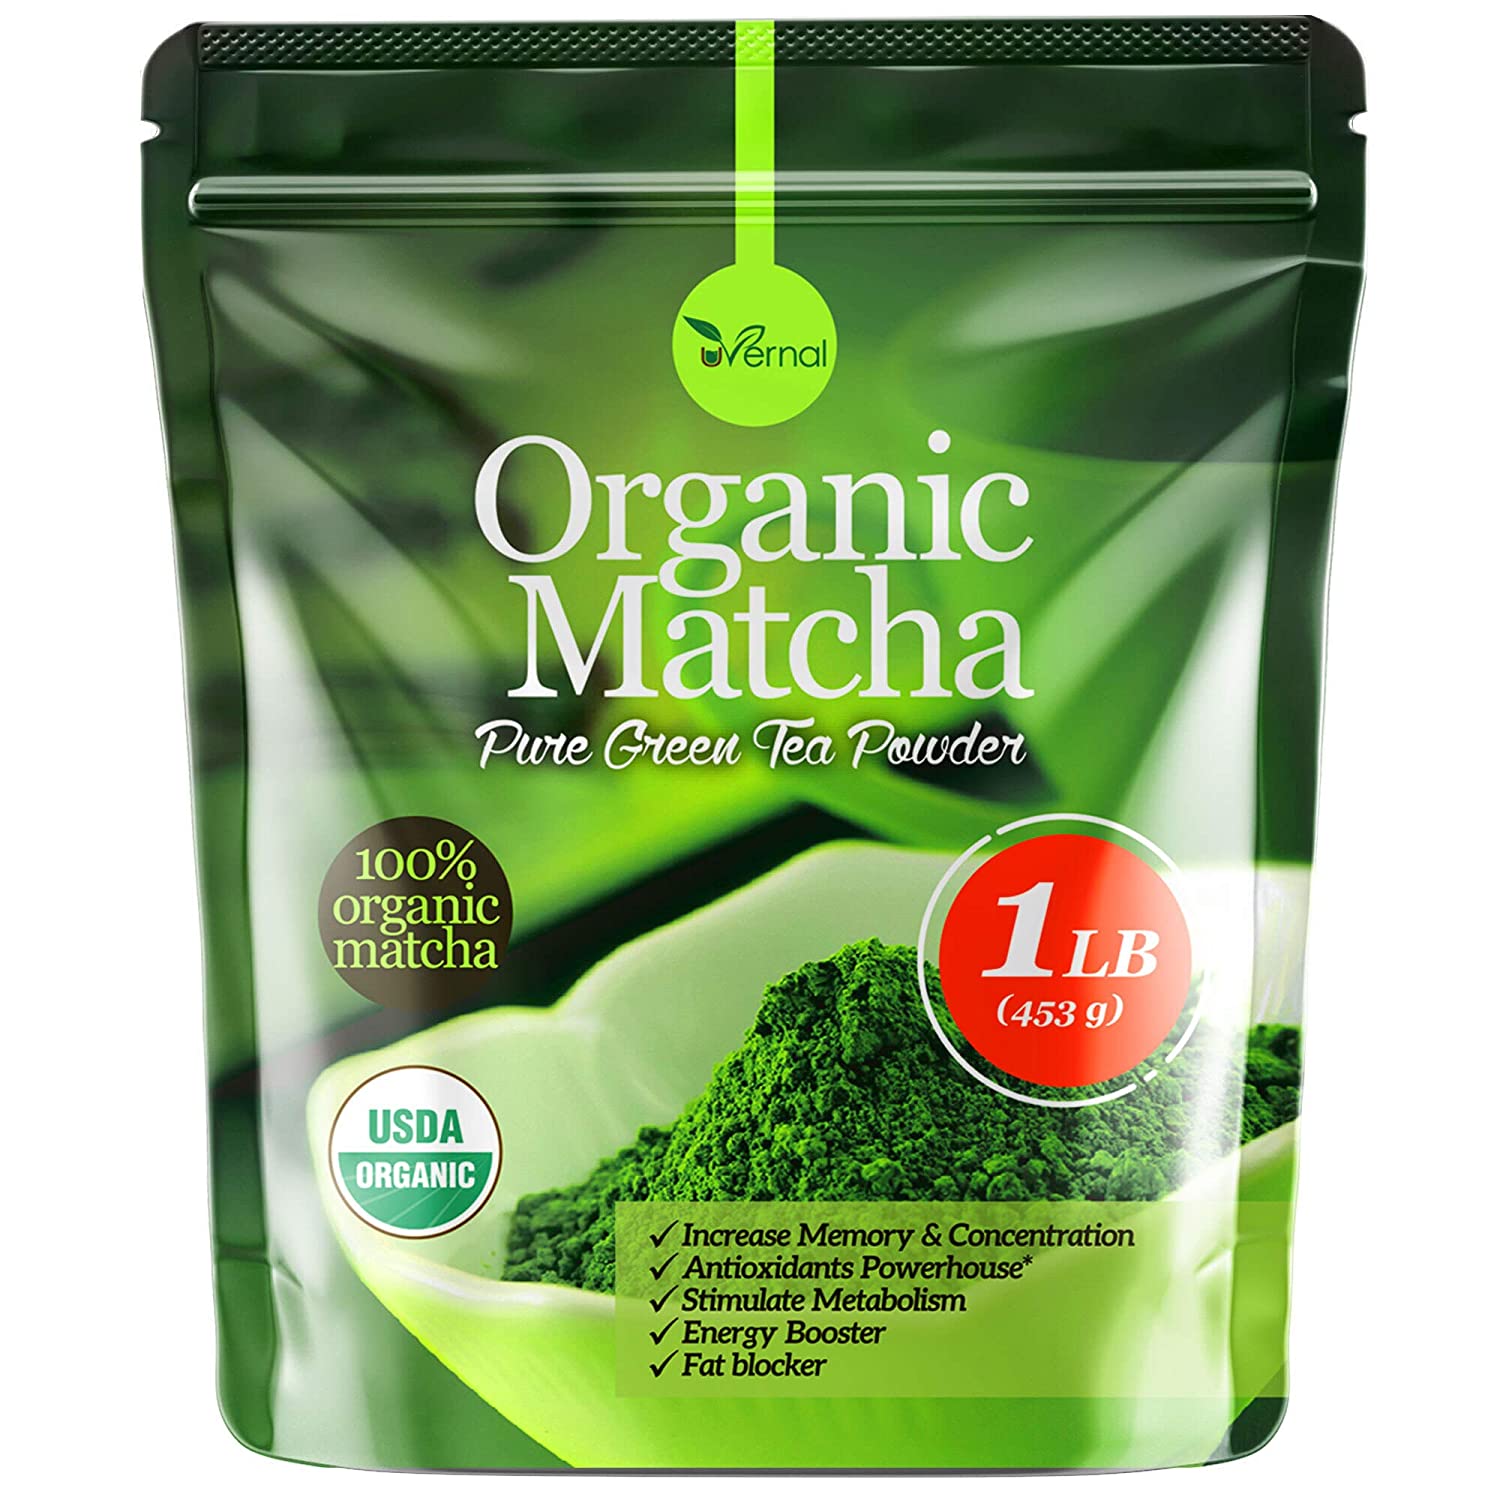 <strong>9. uVernal Matcha Green Tea Powder</strong>